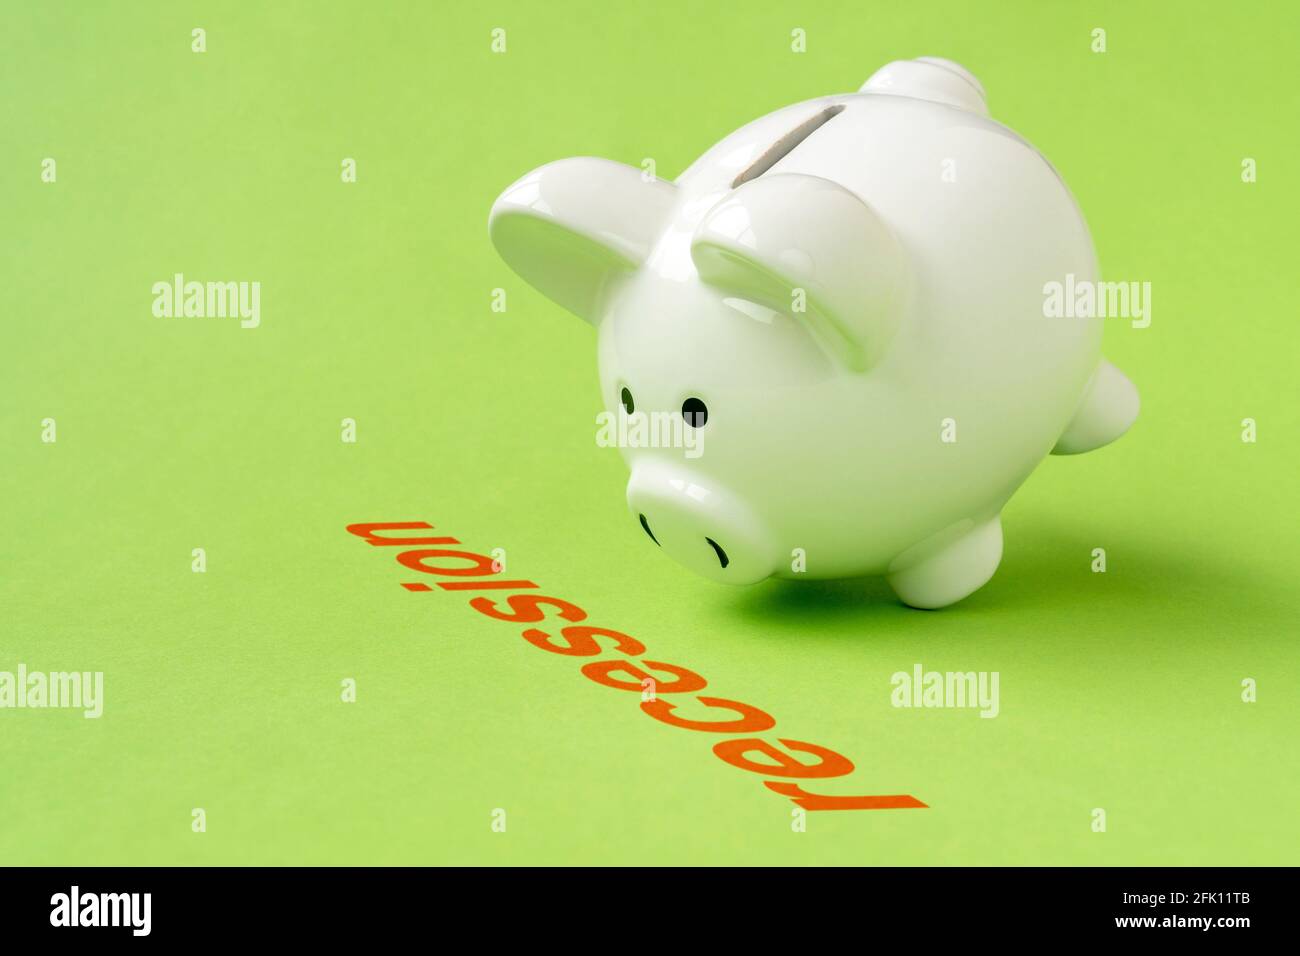 Concept financial crisis, economic depression, crash financial. Piggy bank standing near the word RECESSION. Stock Photo